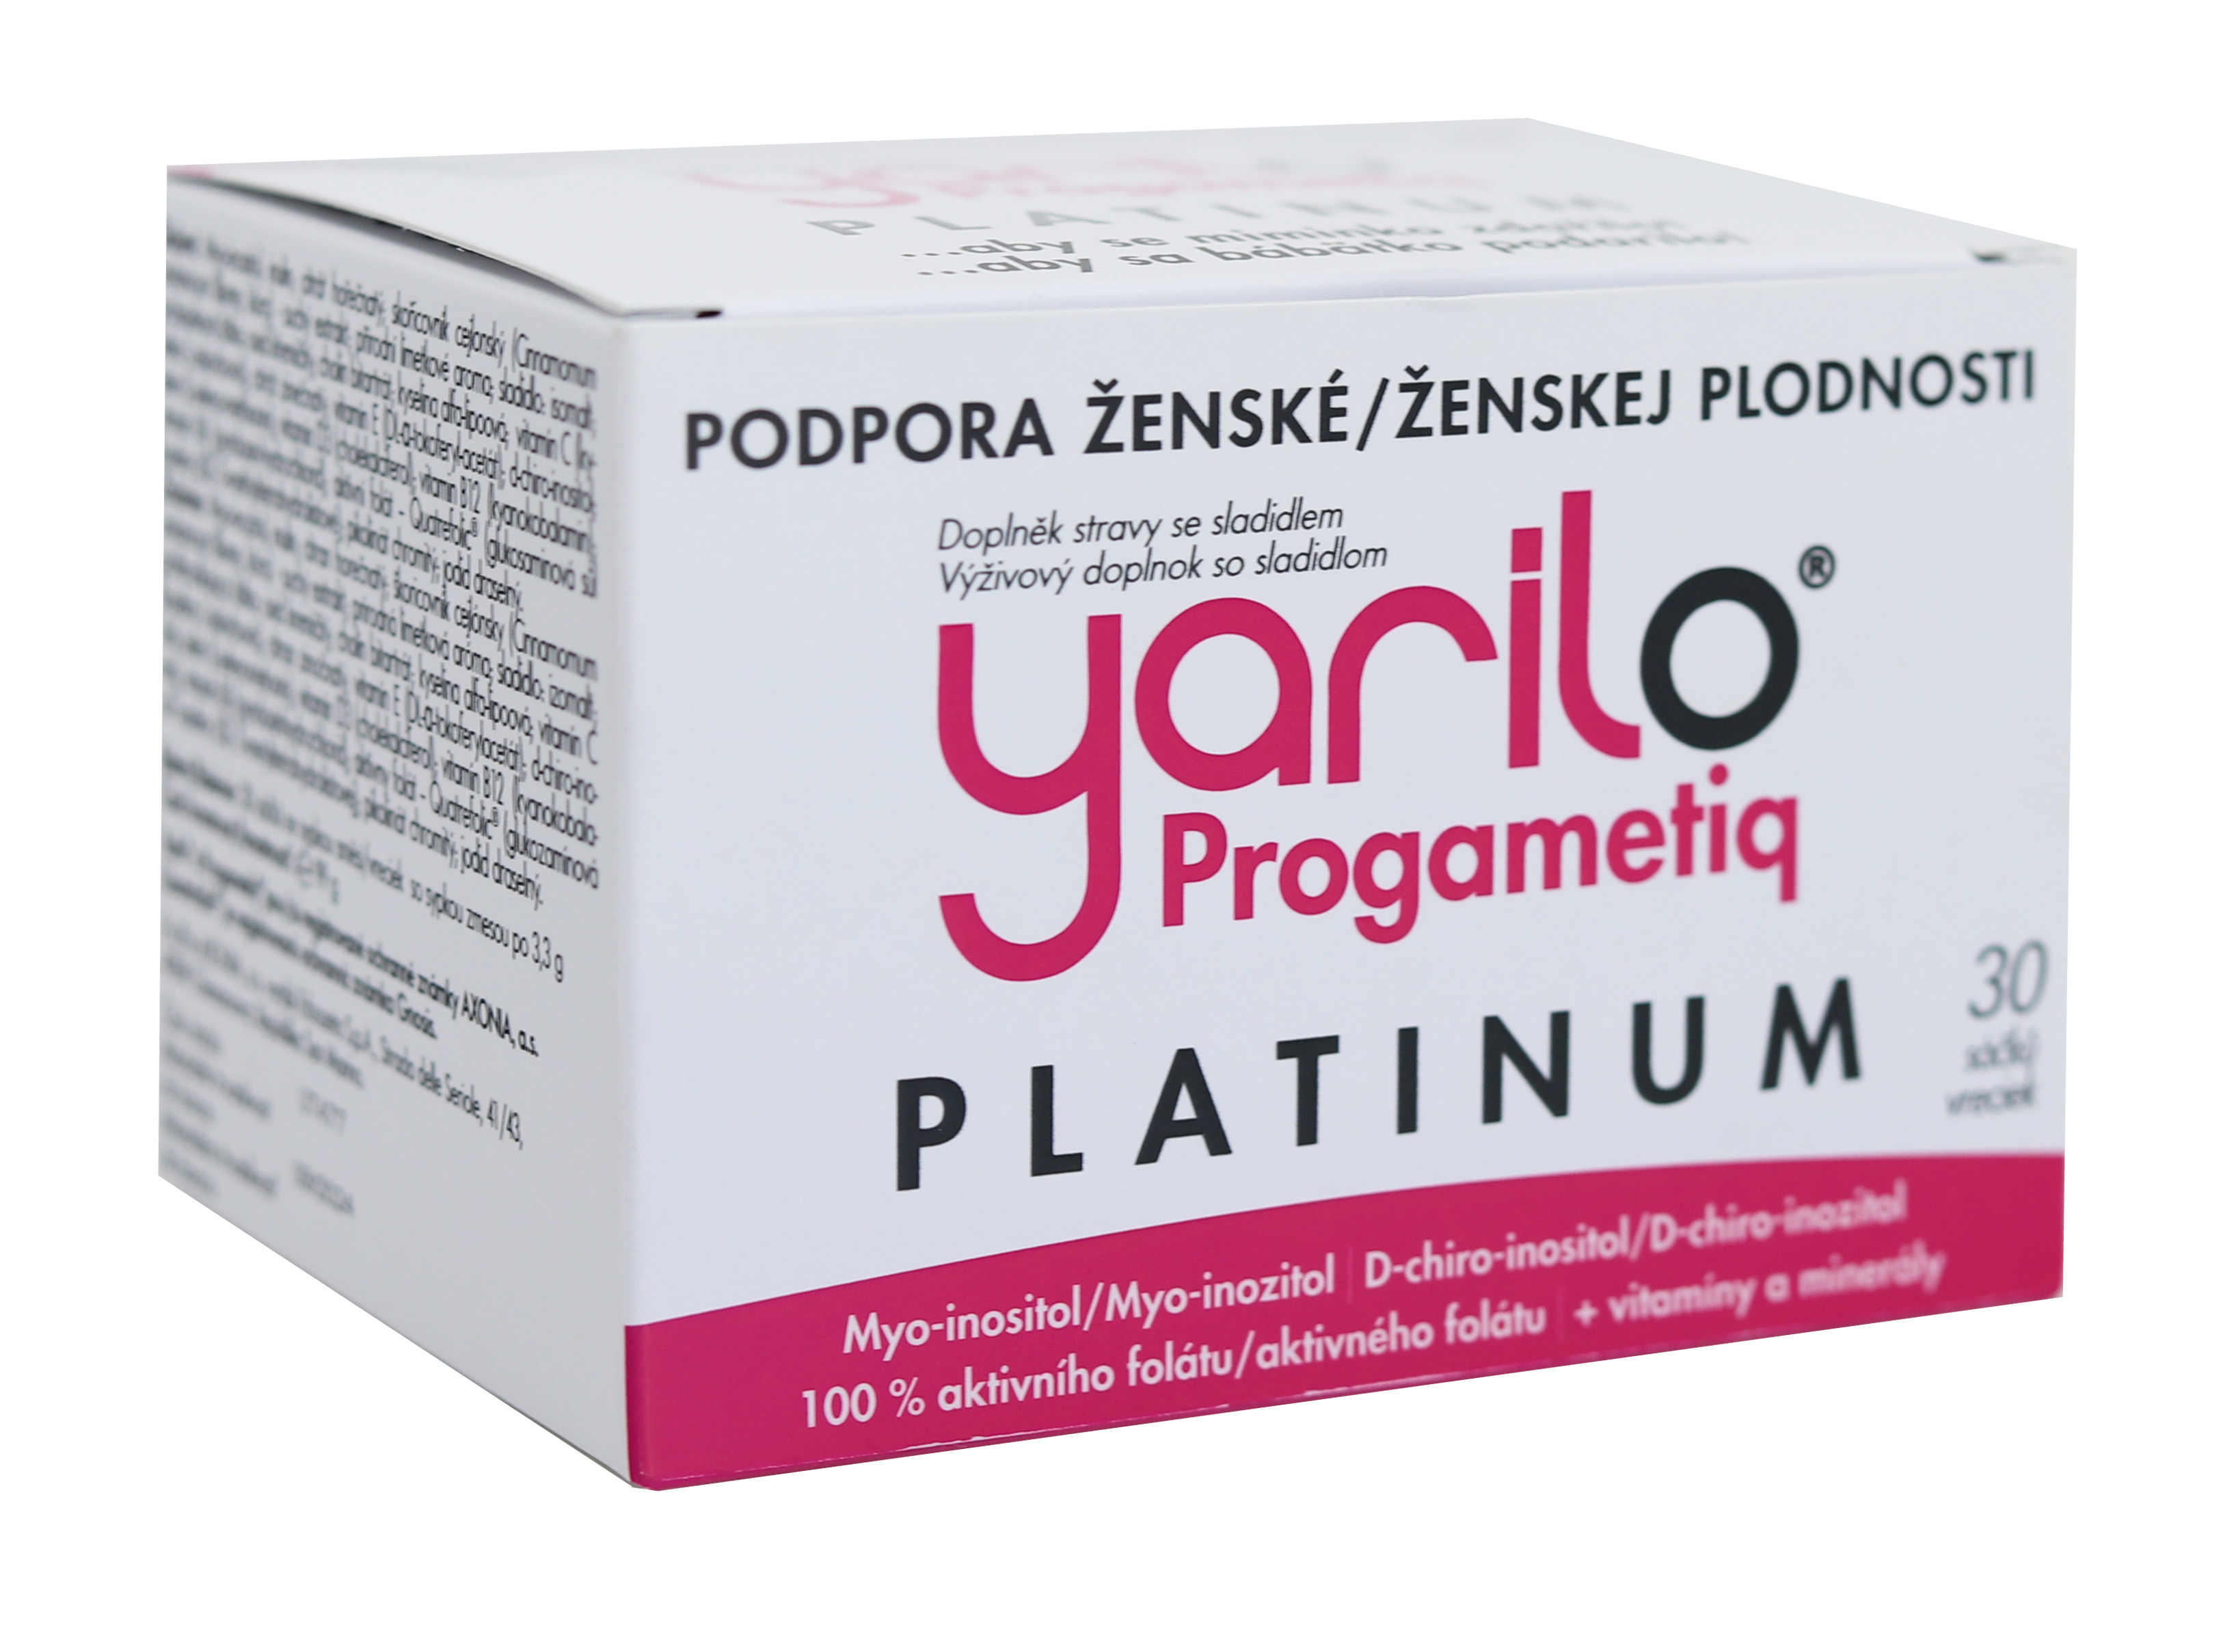 Axonia Yarilo Progametiq PLATINUM, 30 sáčků